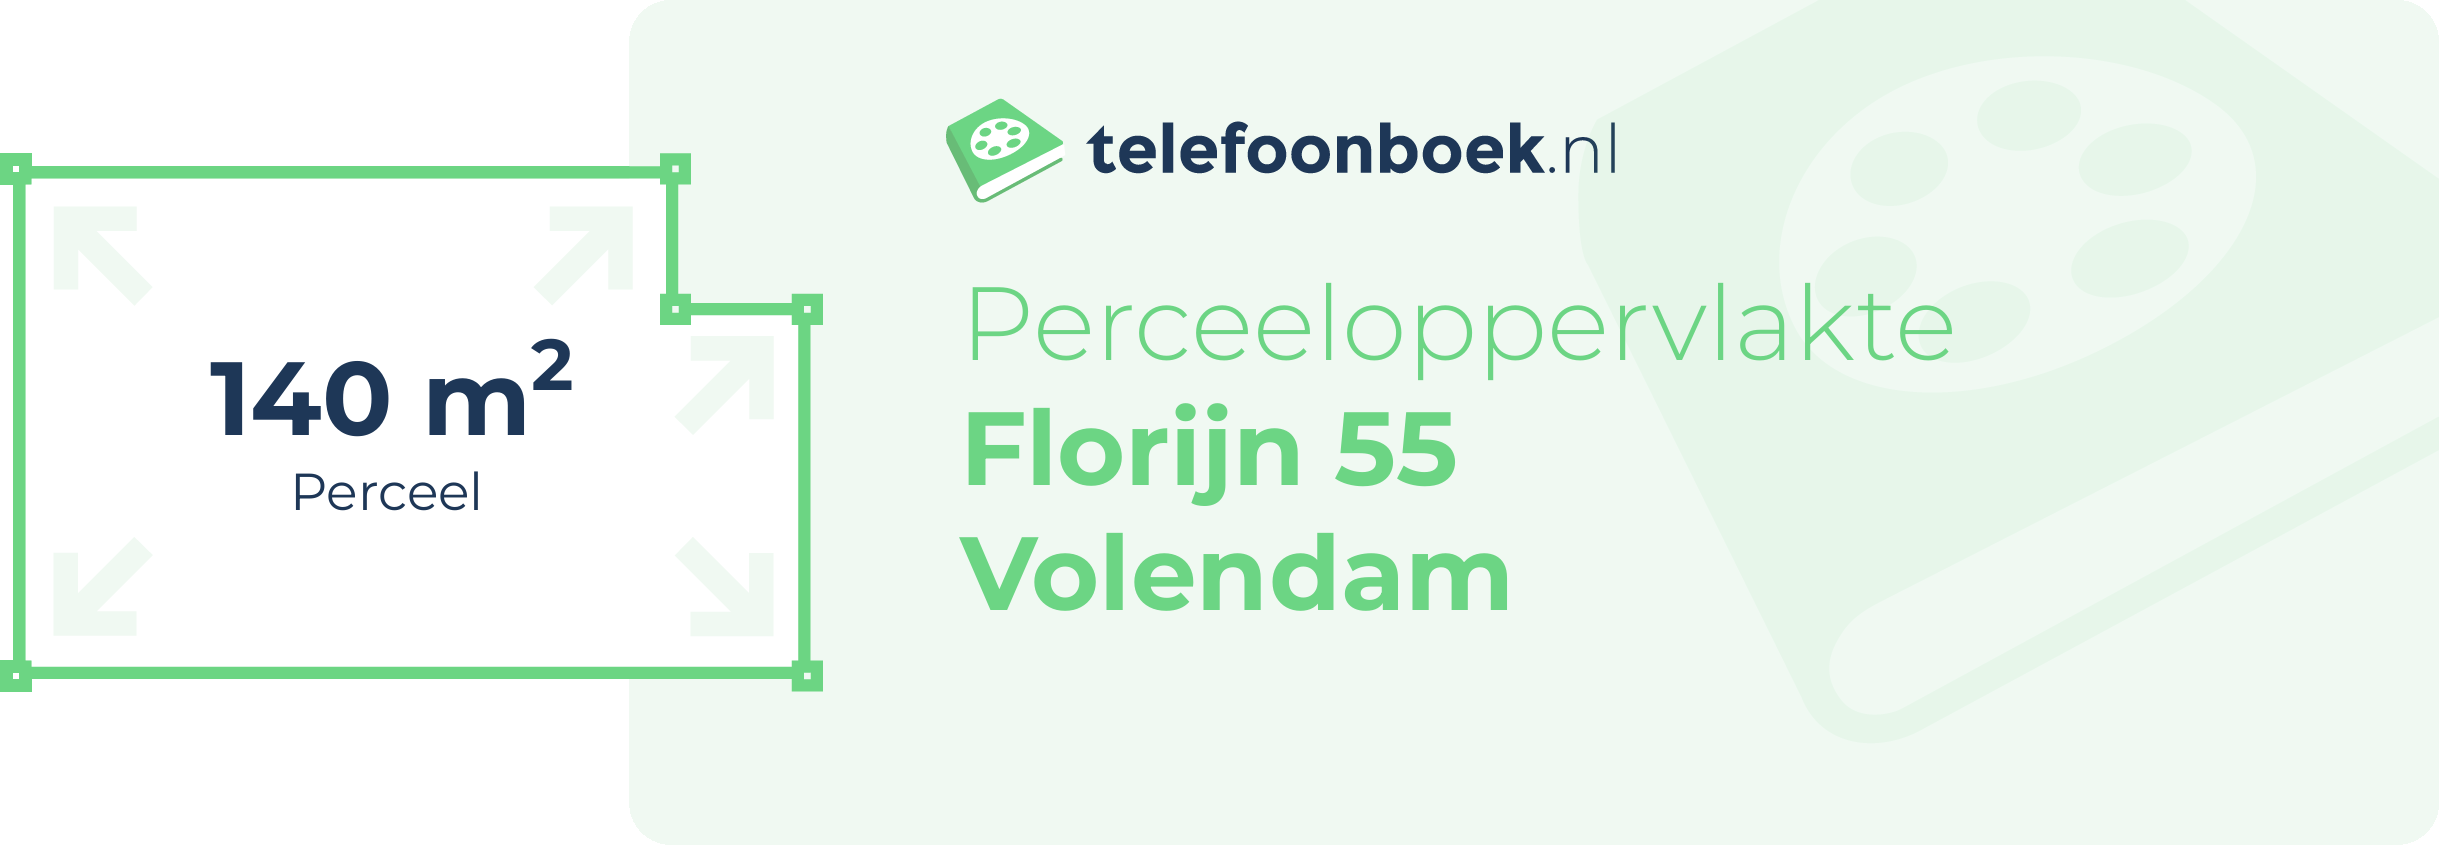 Perceeloppervlakte Florijn 55 Volendam